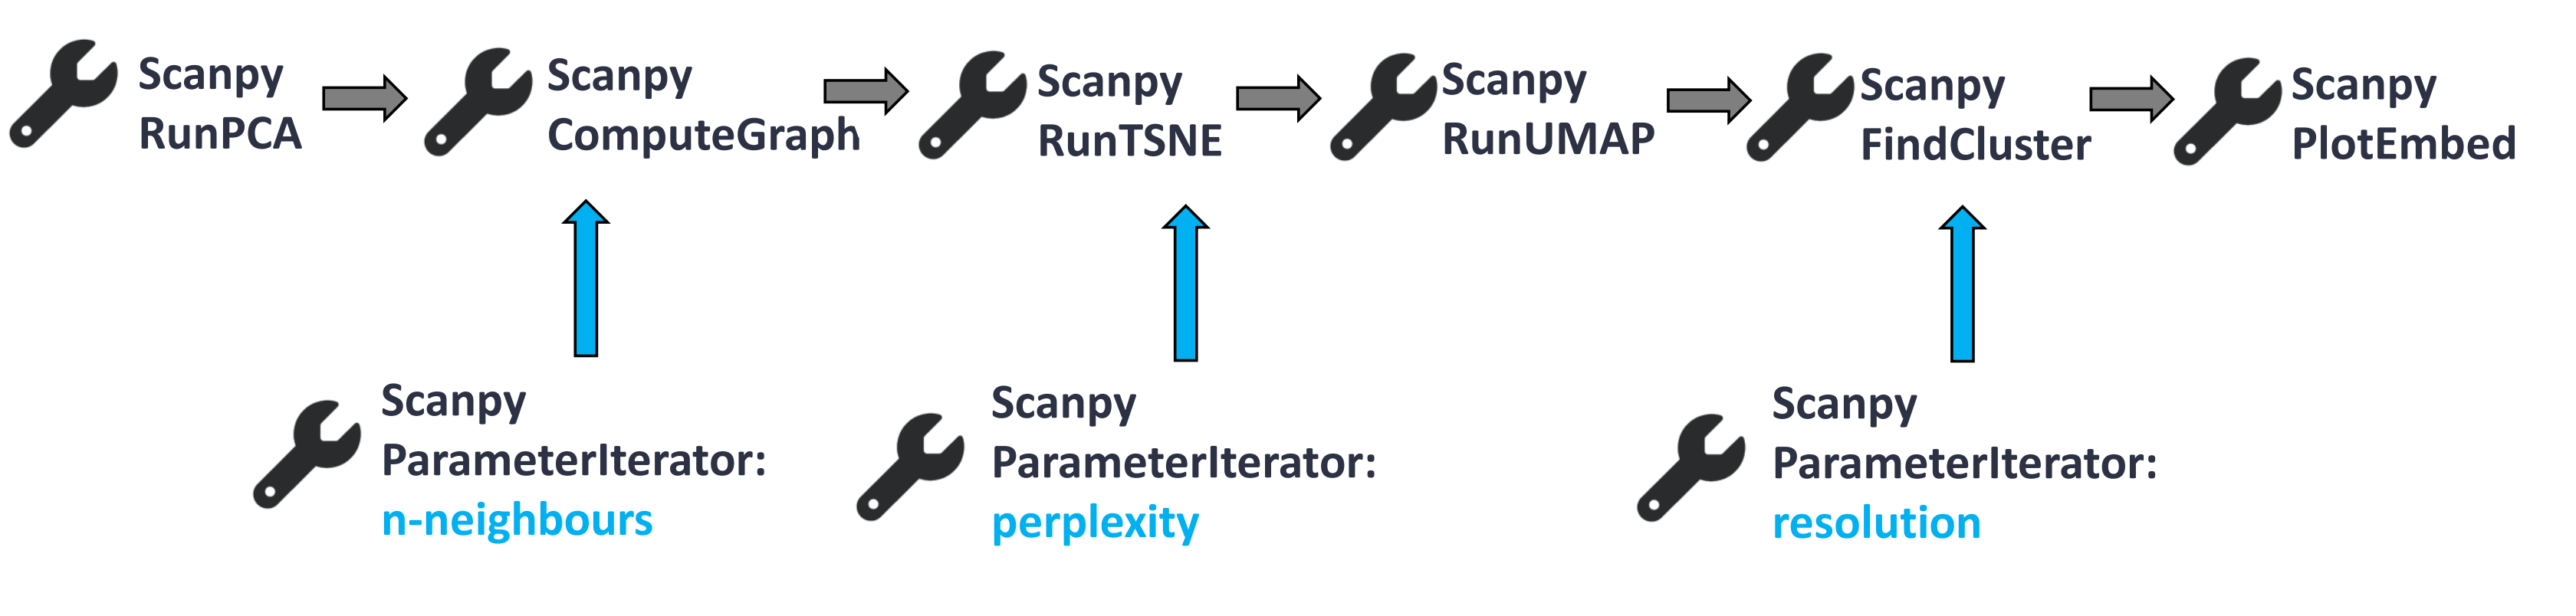 Workflow that we are going to use in this tutorial: Scanpy RunPCA, Scanpy ComputeGraph, Scanpy RunTSNE, Scanpy RunUMAP, Scanpy FindCluster, Scanpy PlotEmbed. 